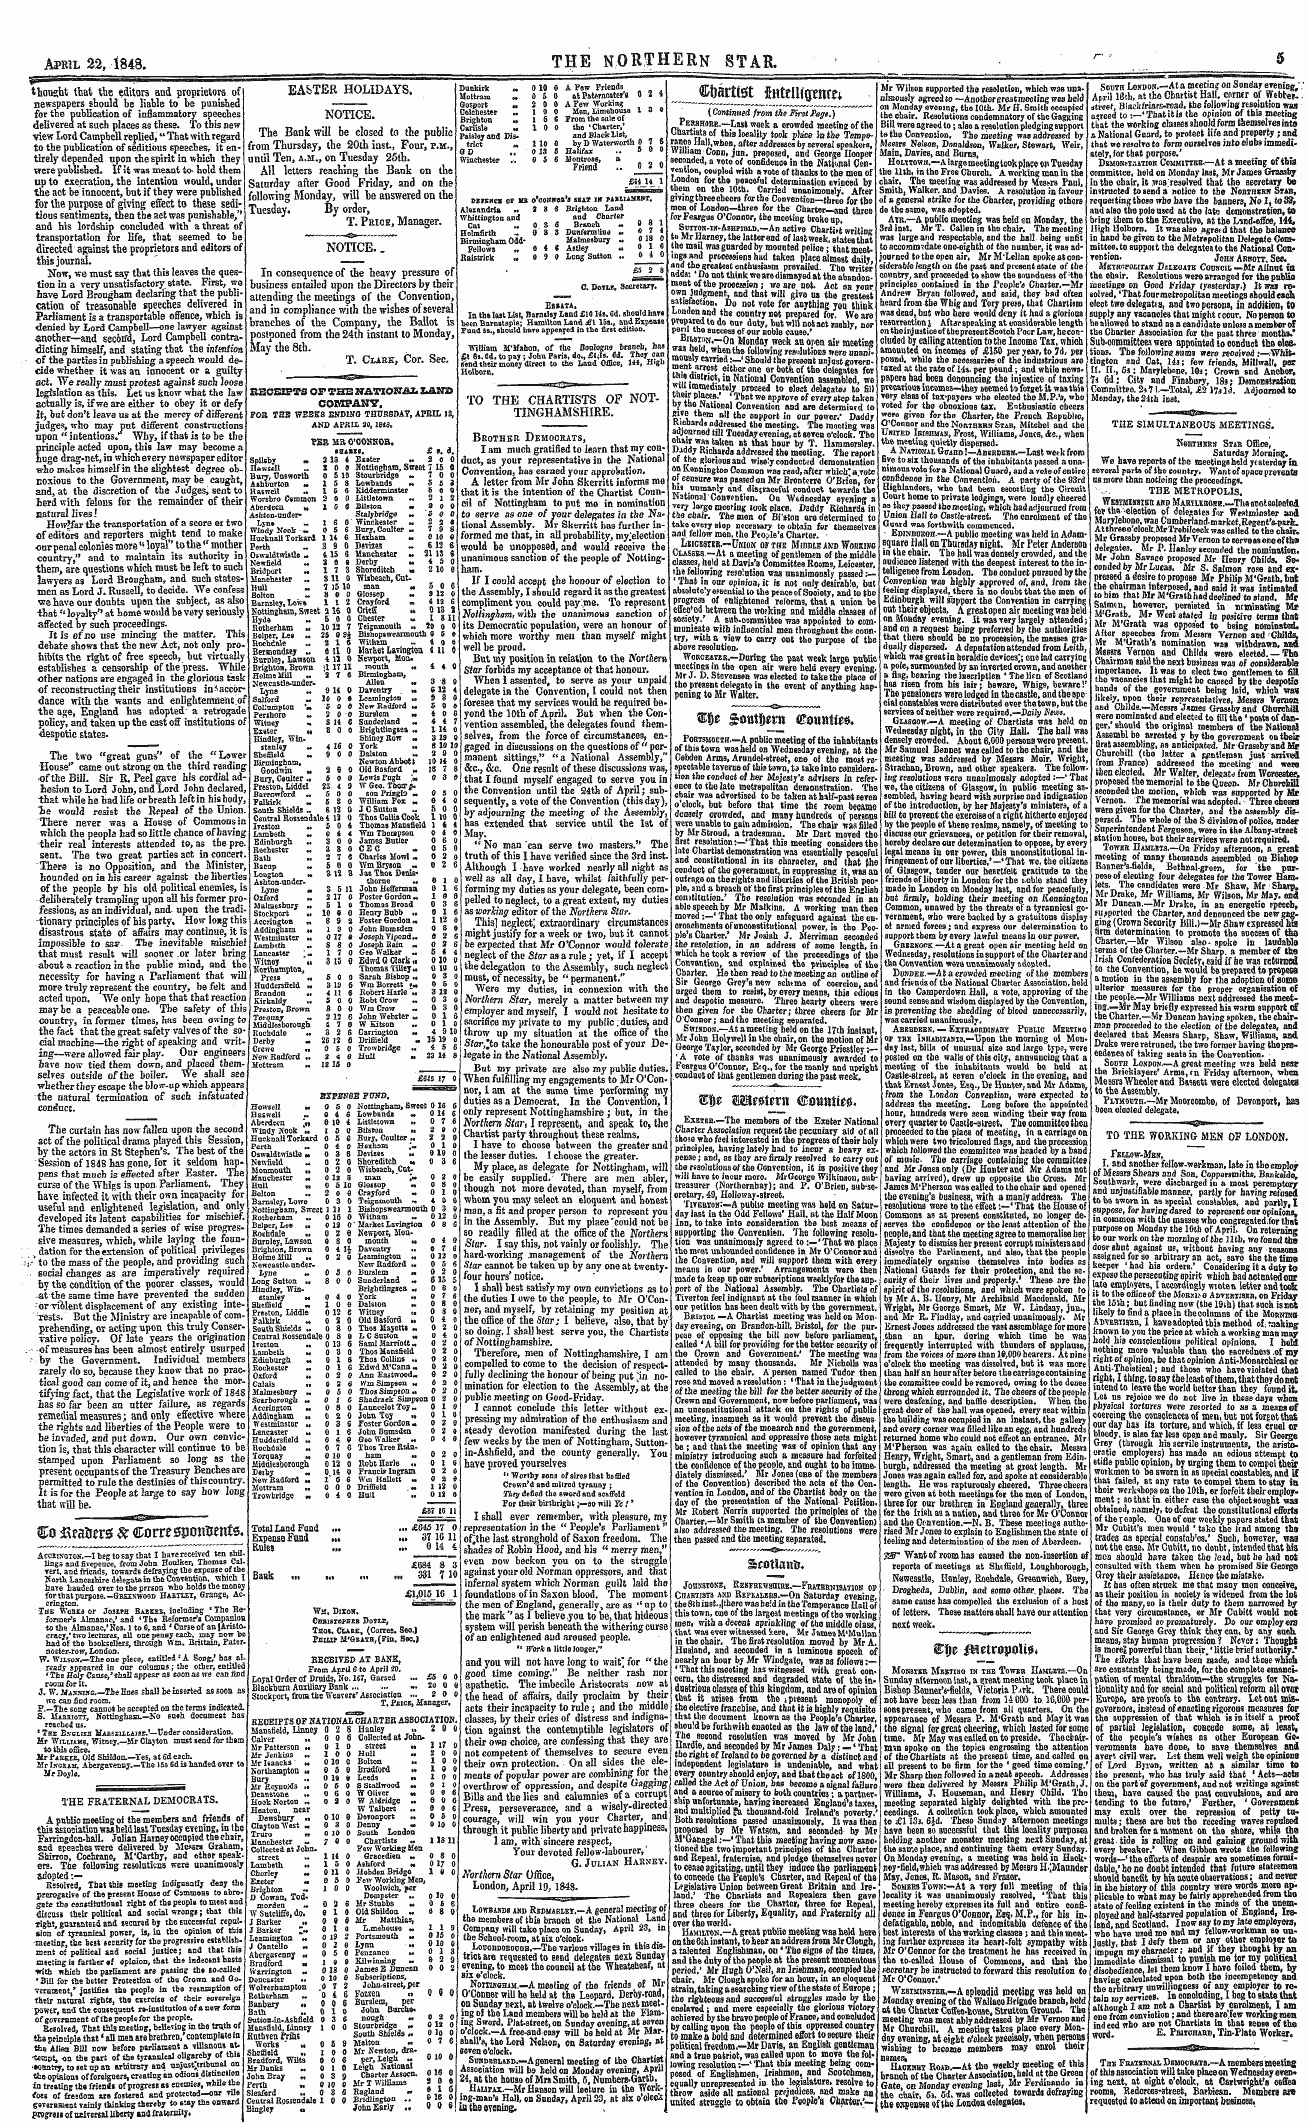 Northern Star (1837-1852): jS F Y, 3rd edition - Co £Ea$Ers # ©Orrespontrniis